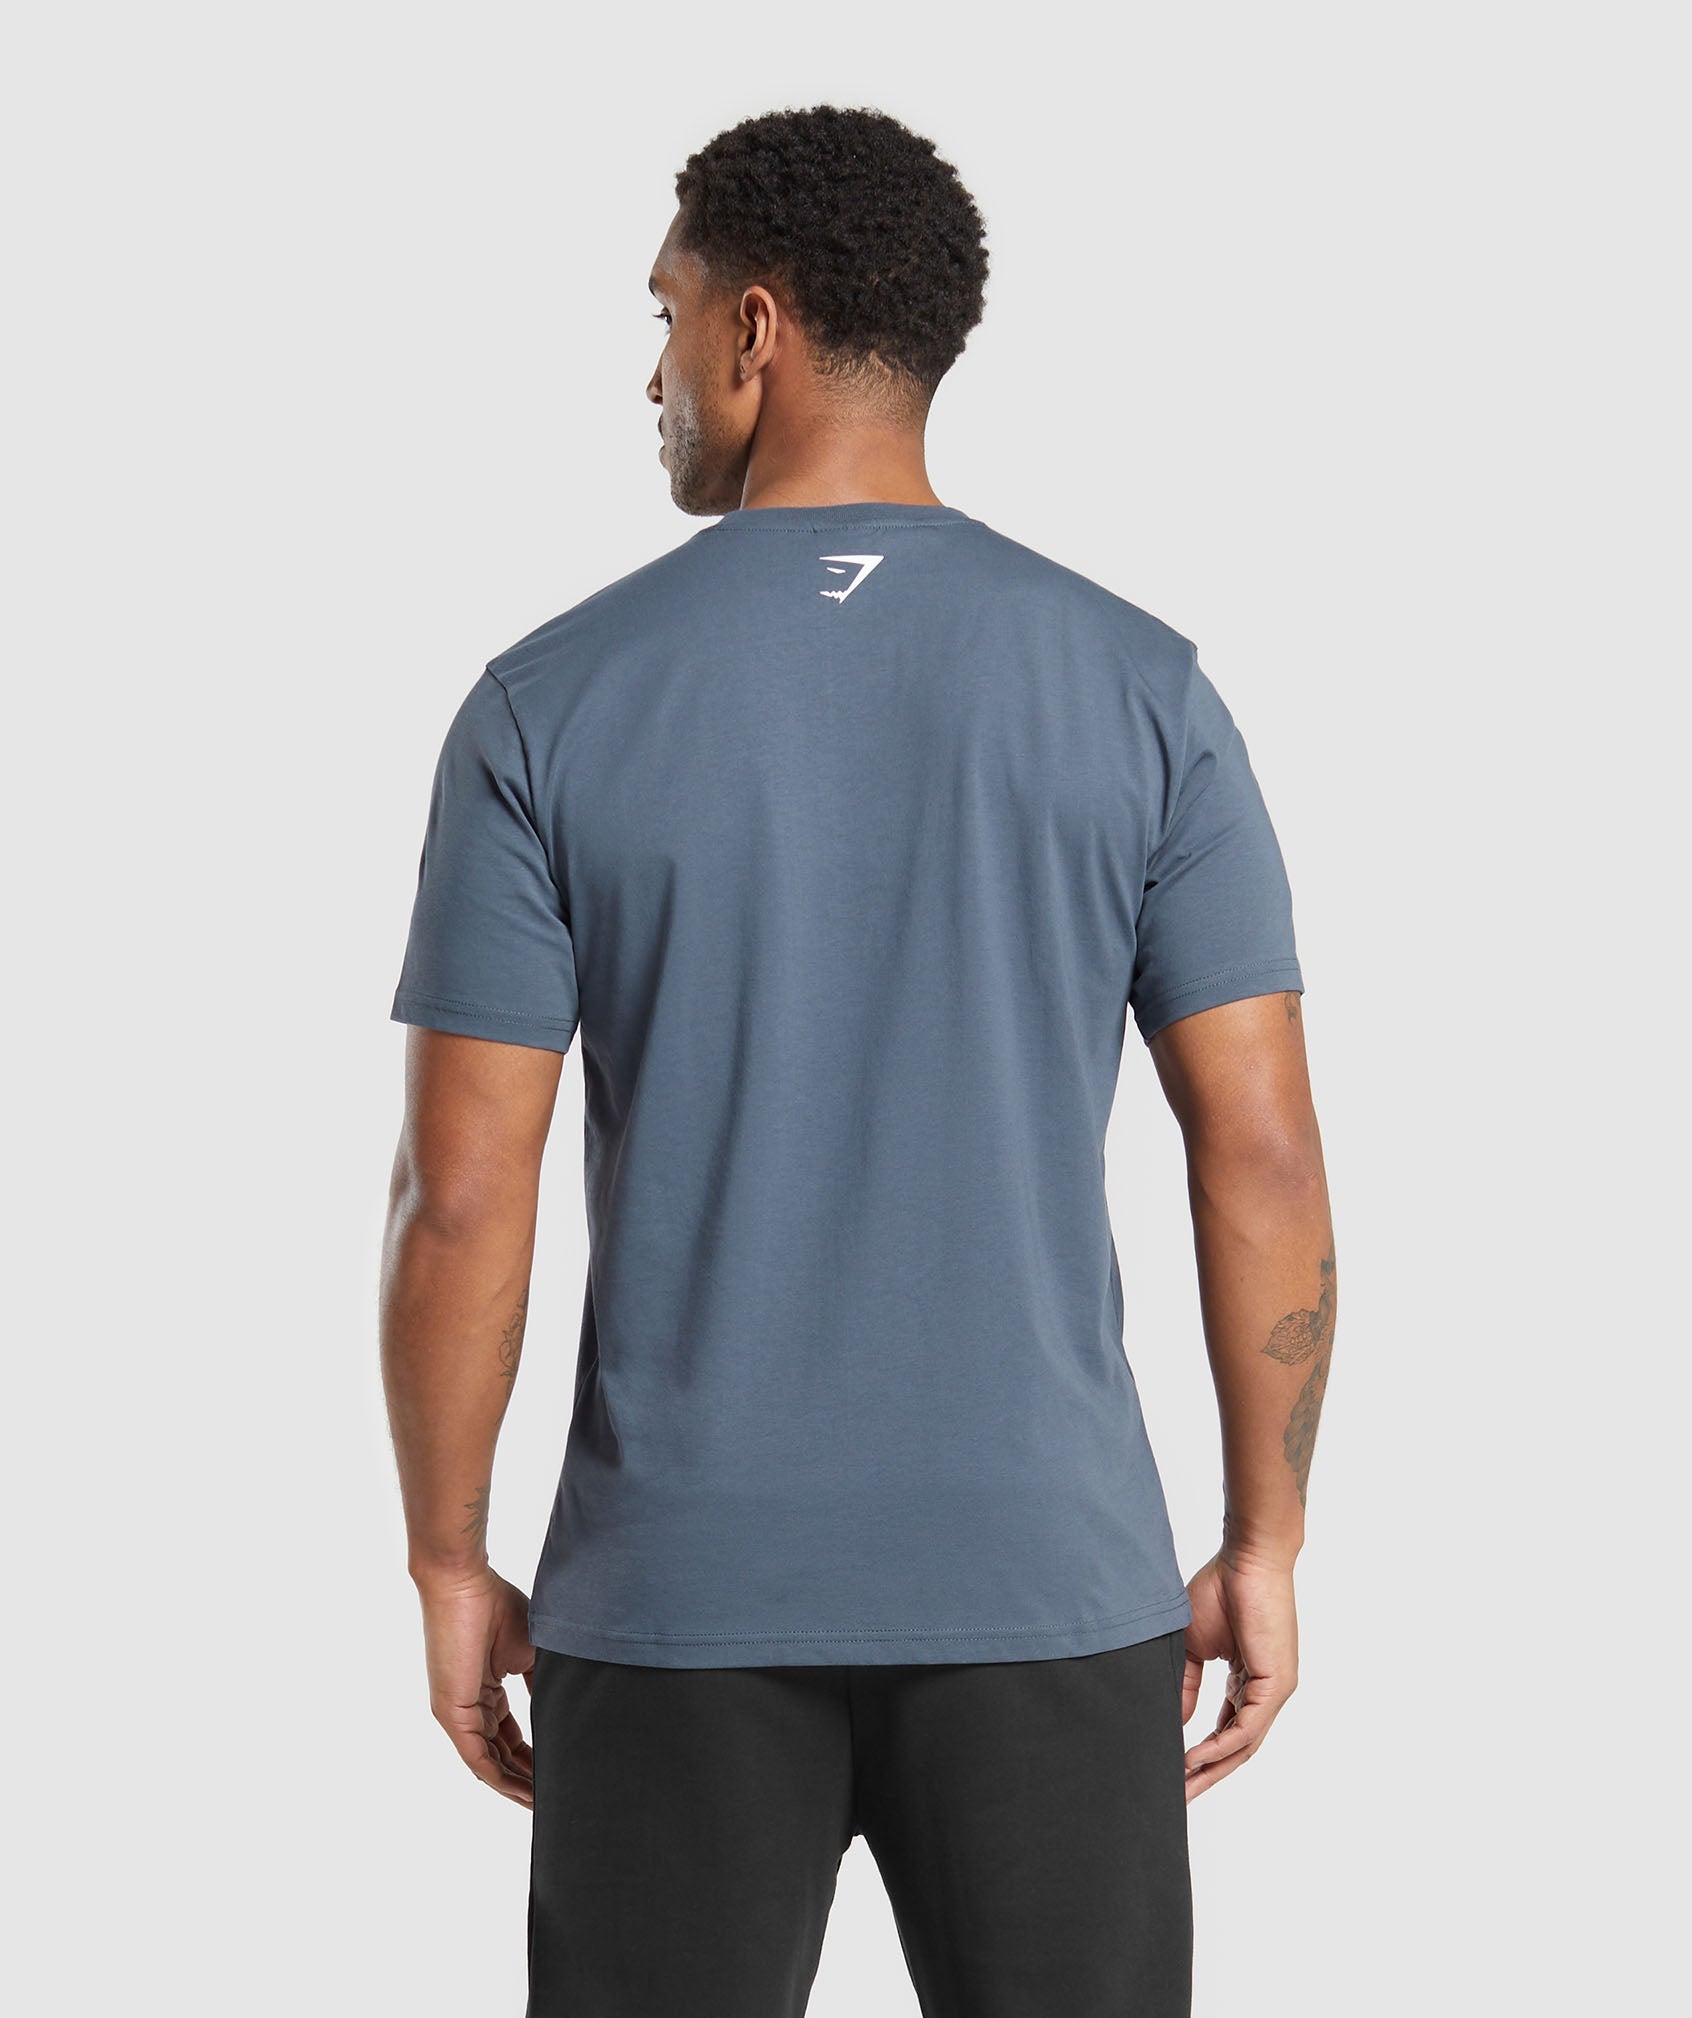 Lifting Club T-Shirt in Titanium Blue - view 2